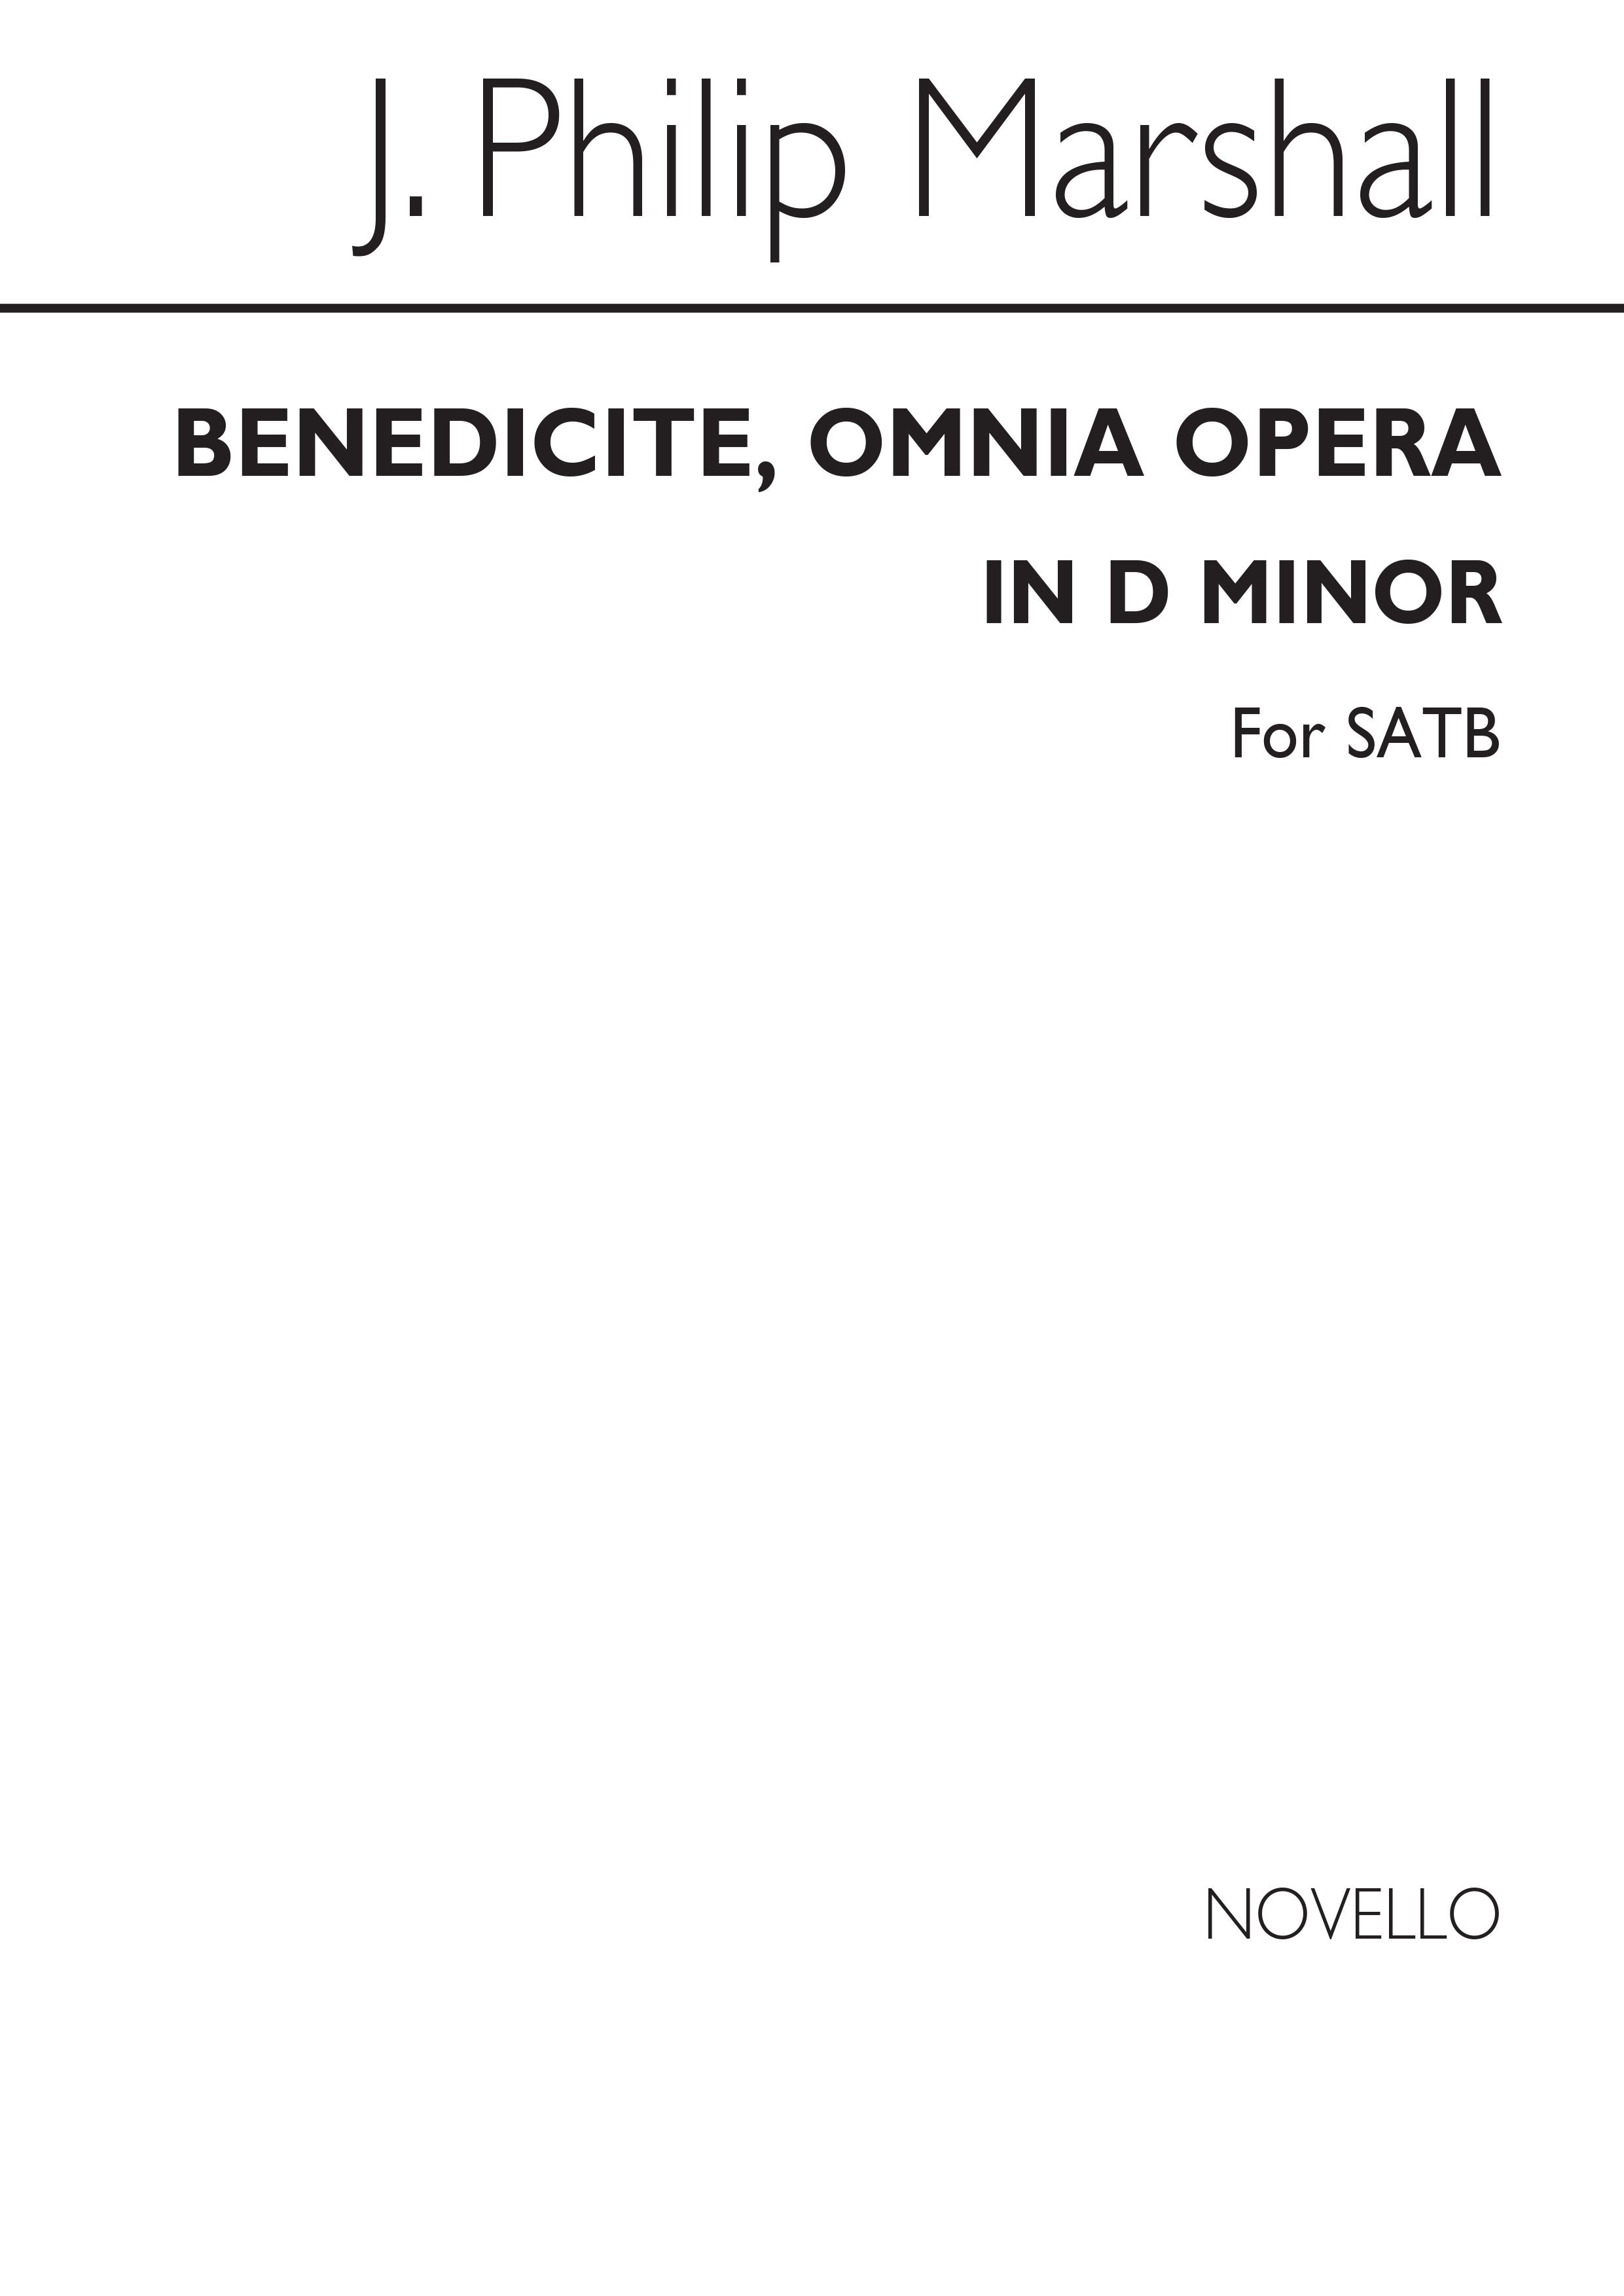 Marshall, J Benedicite Omnia Opera D Min Satb